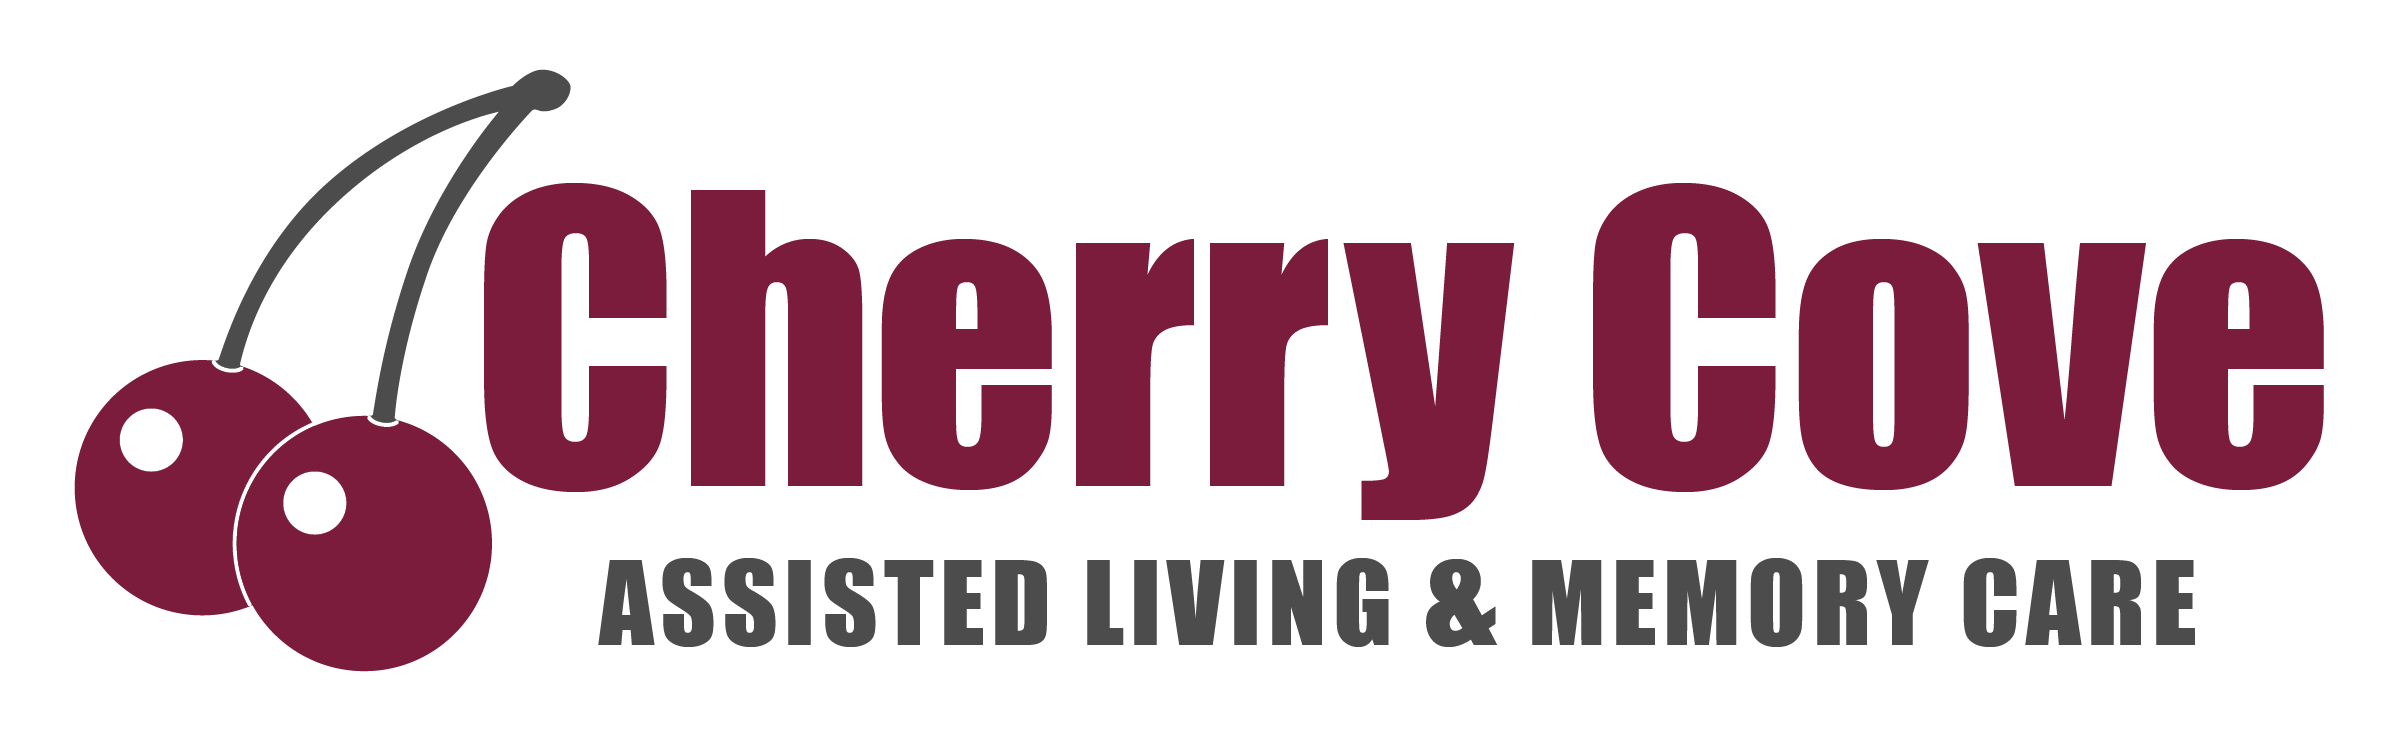 Cherry Cove HR Logo